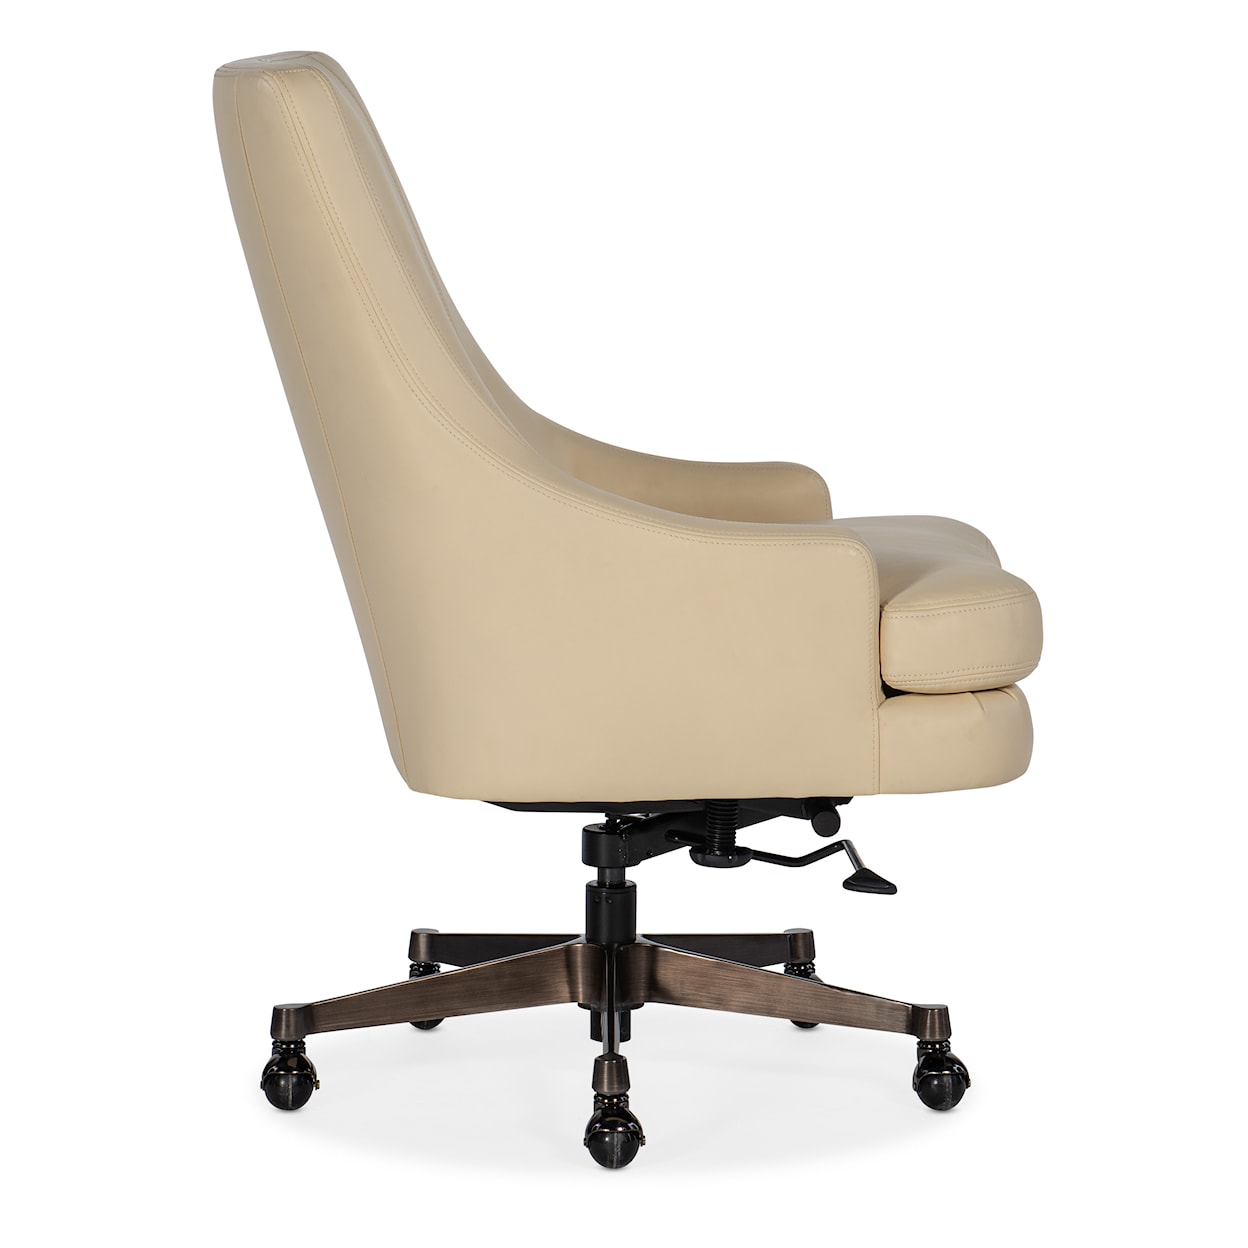 Hooker Furniture Executive Seating Paula Executive Swivel Tilt Chair